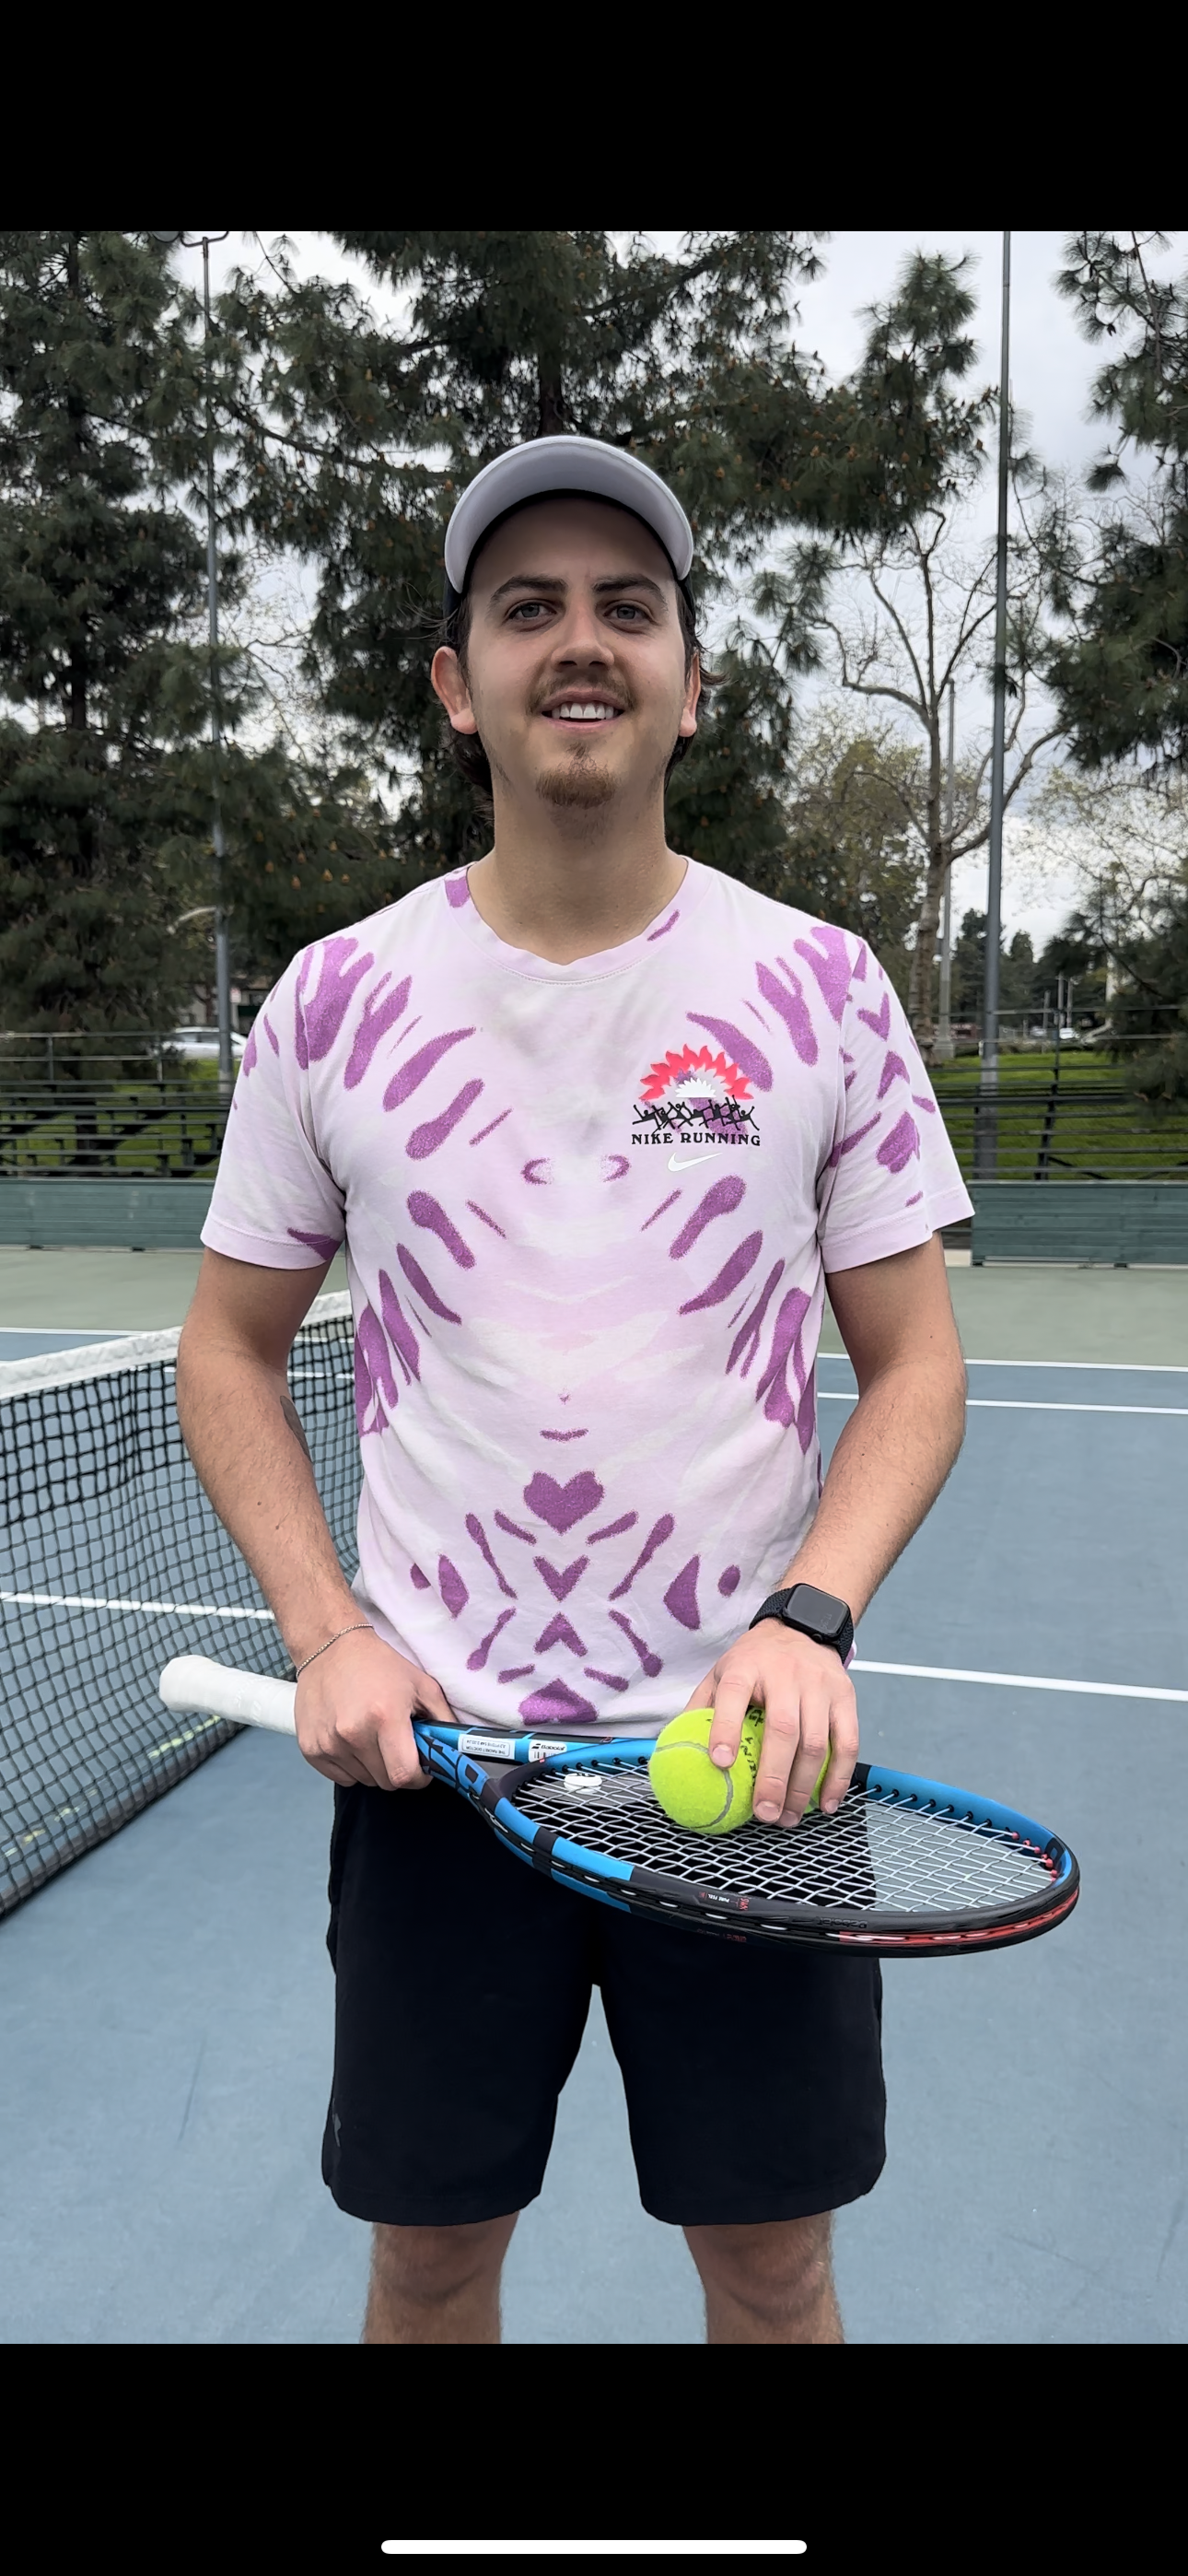 Carlos R. teaches tennis lessons in Glendale, CA